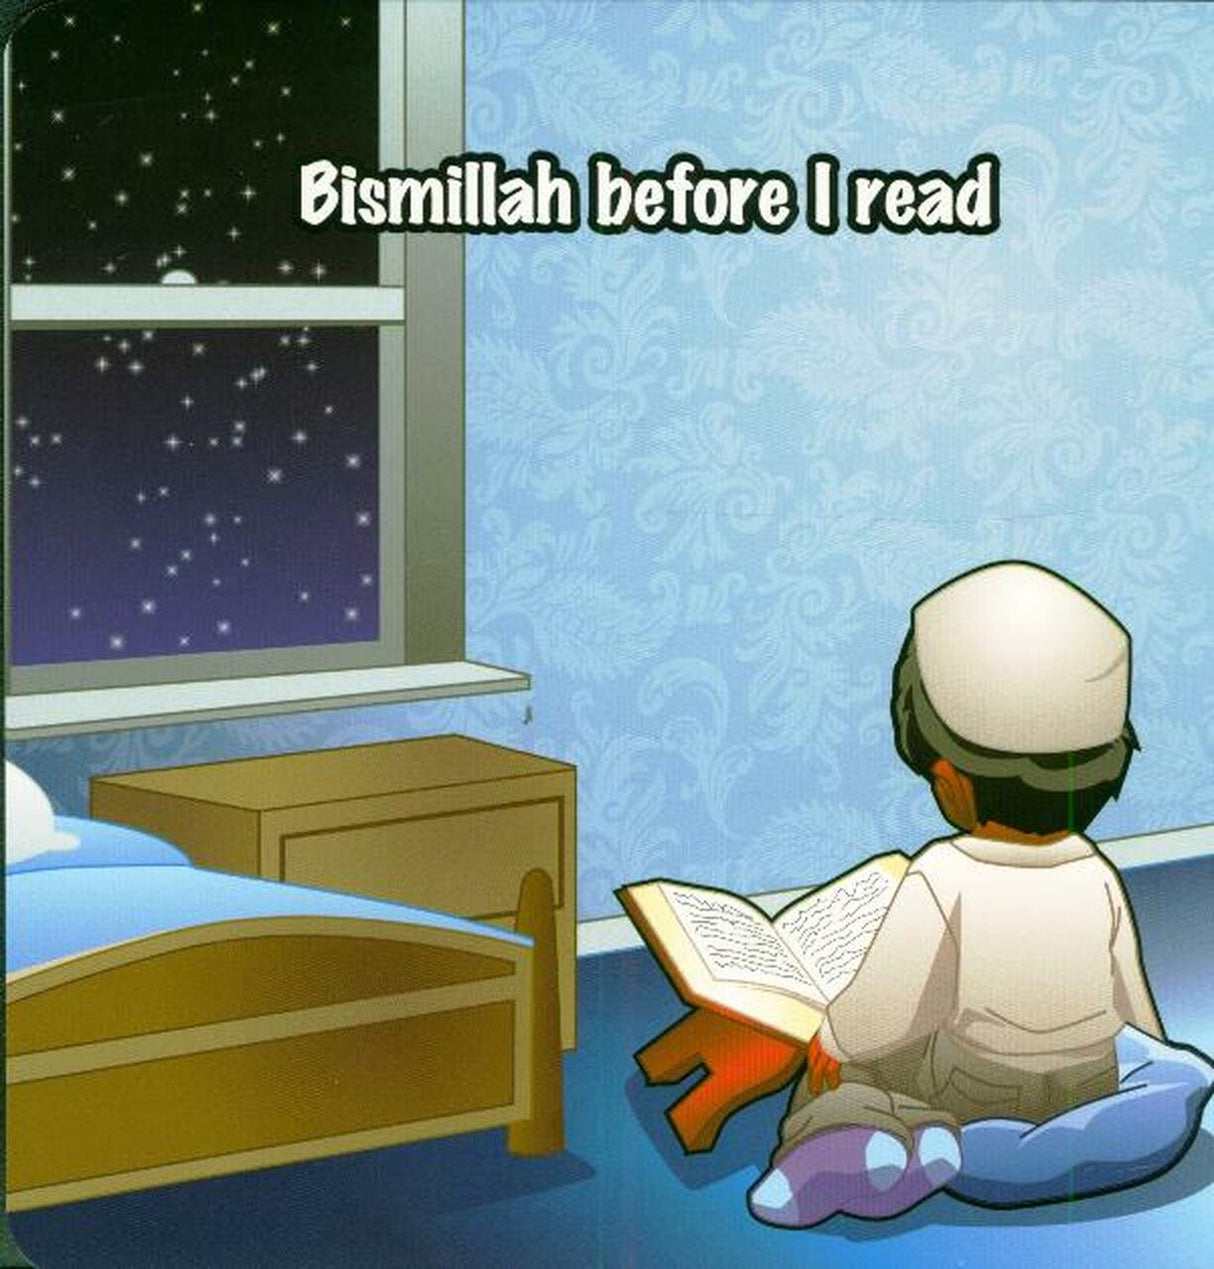 Bismillah - Book 2 (Stairway to Heaven)